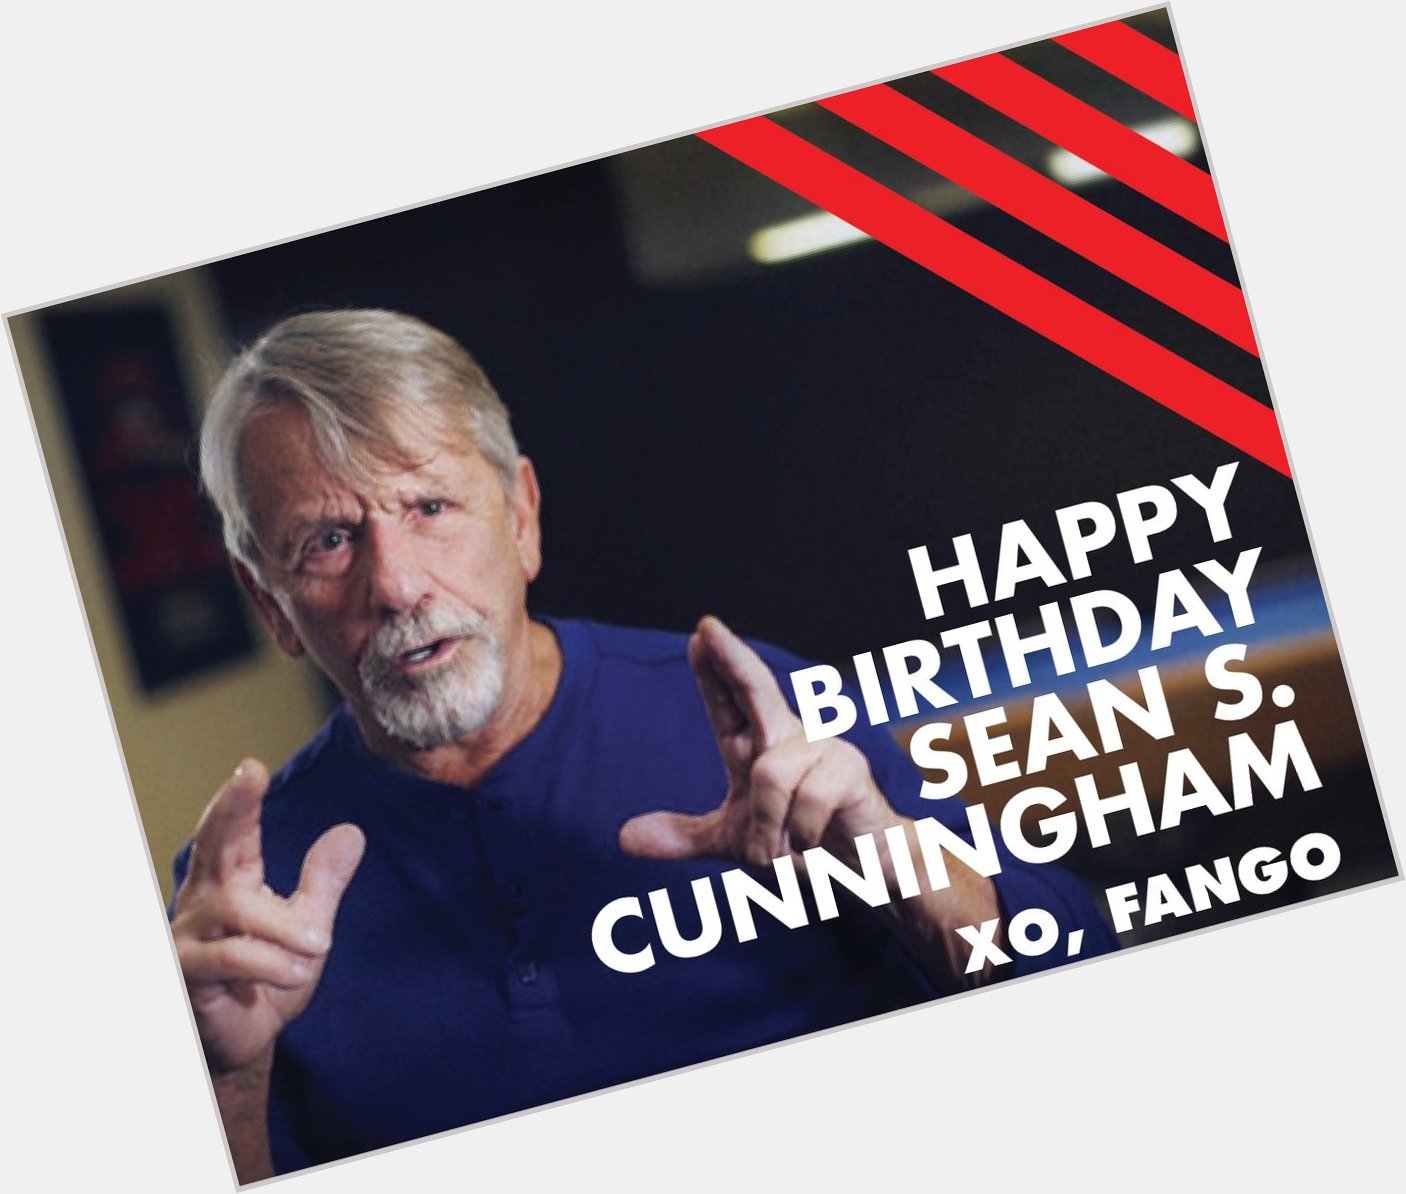 Happy Birthday Sean S. Cunningham! 